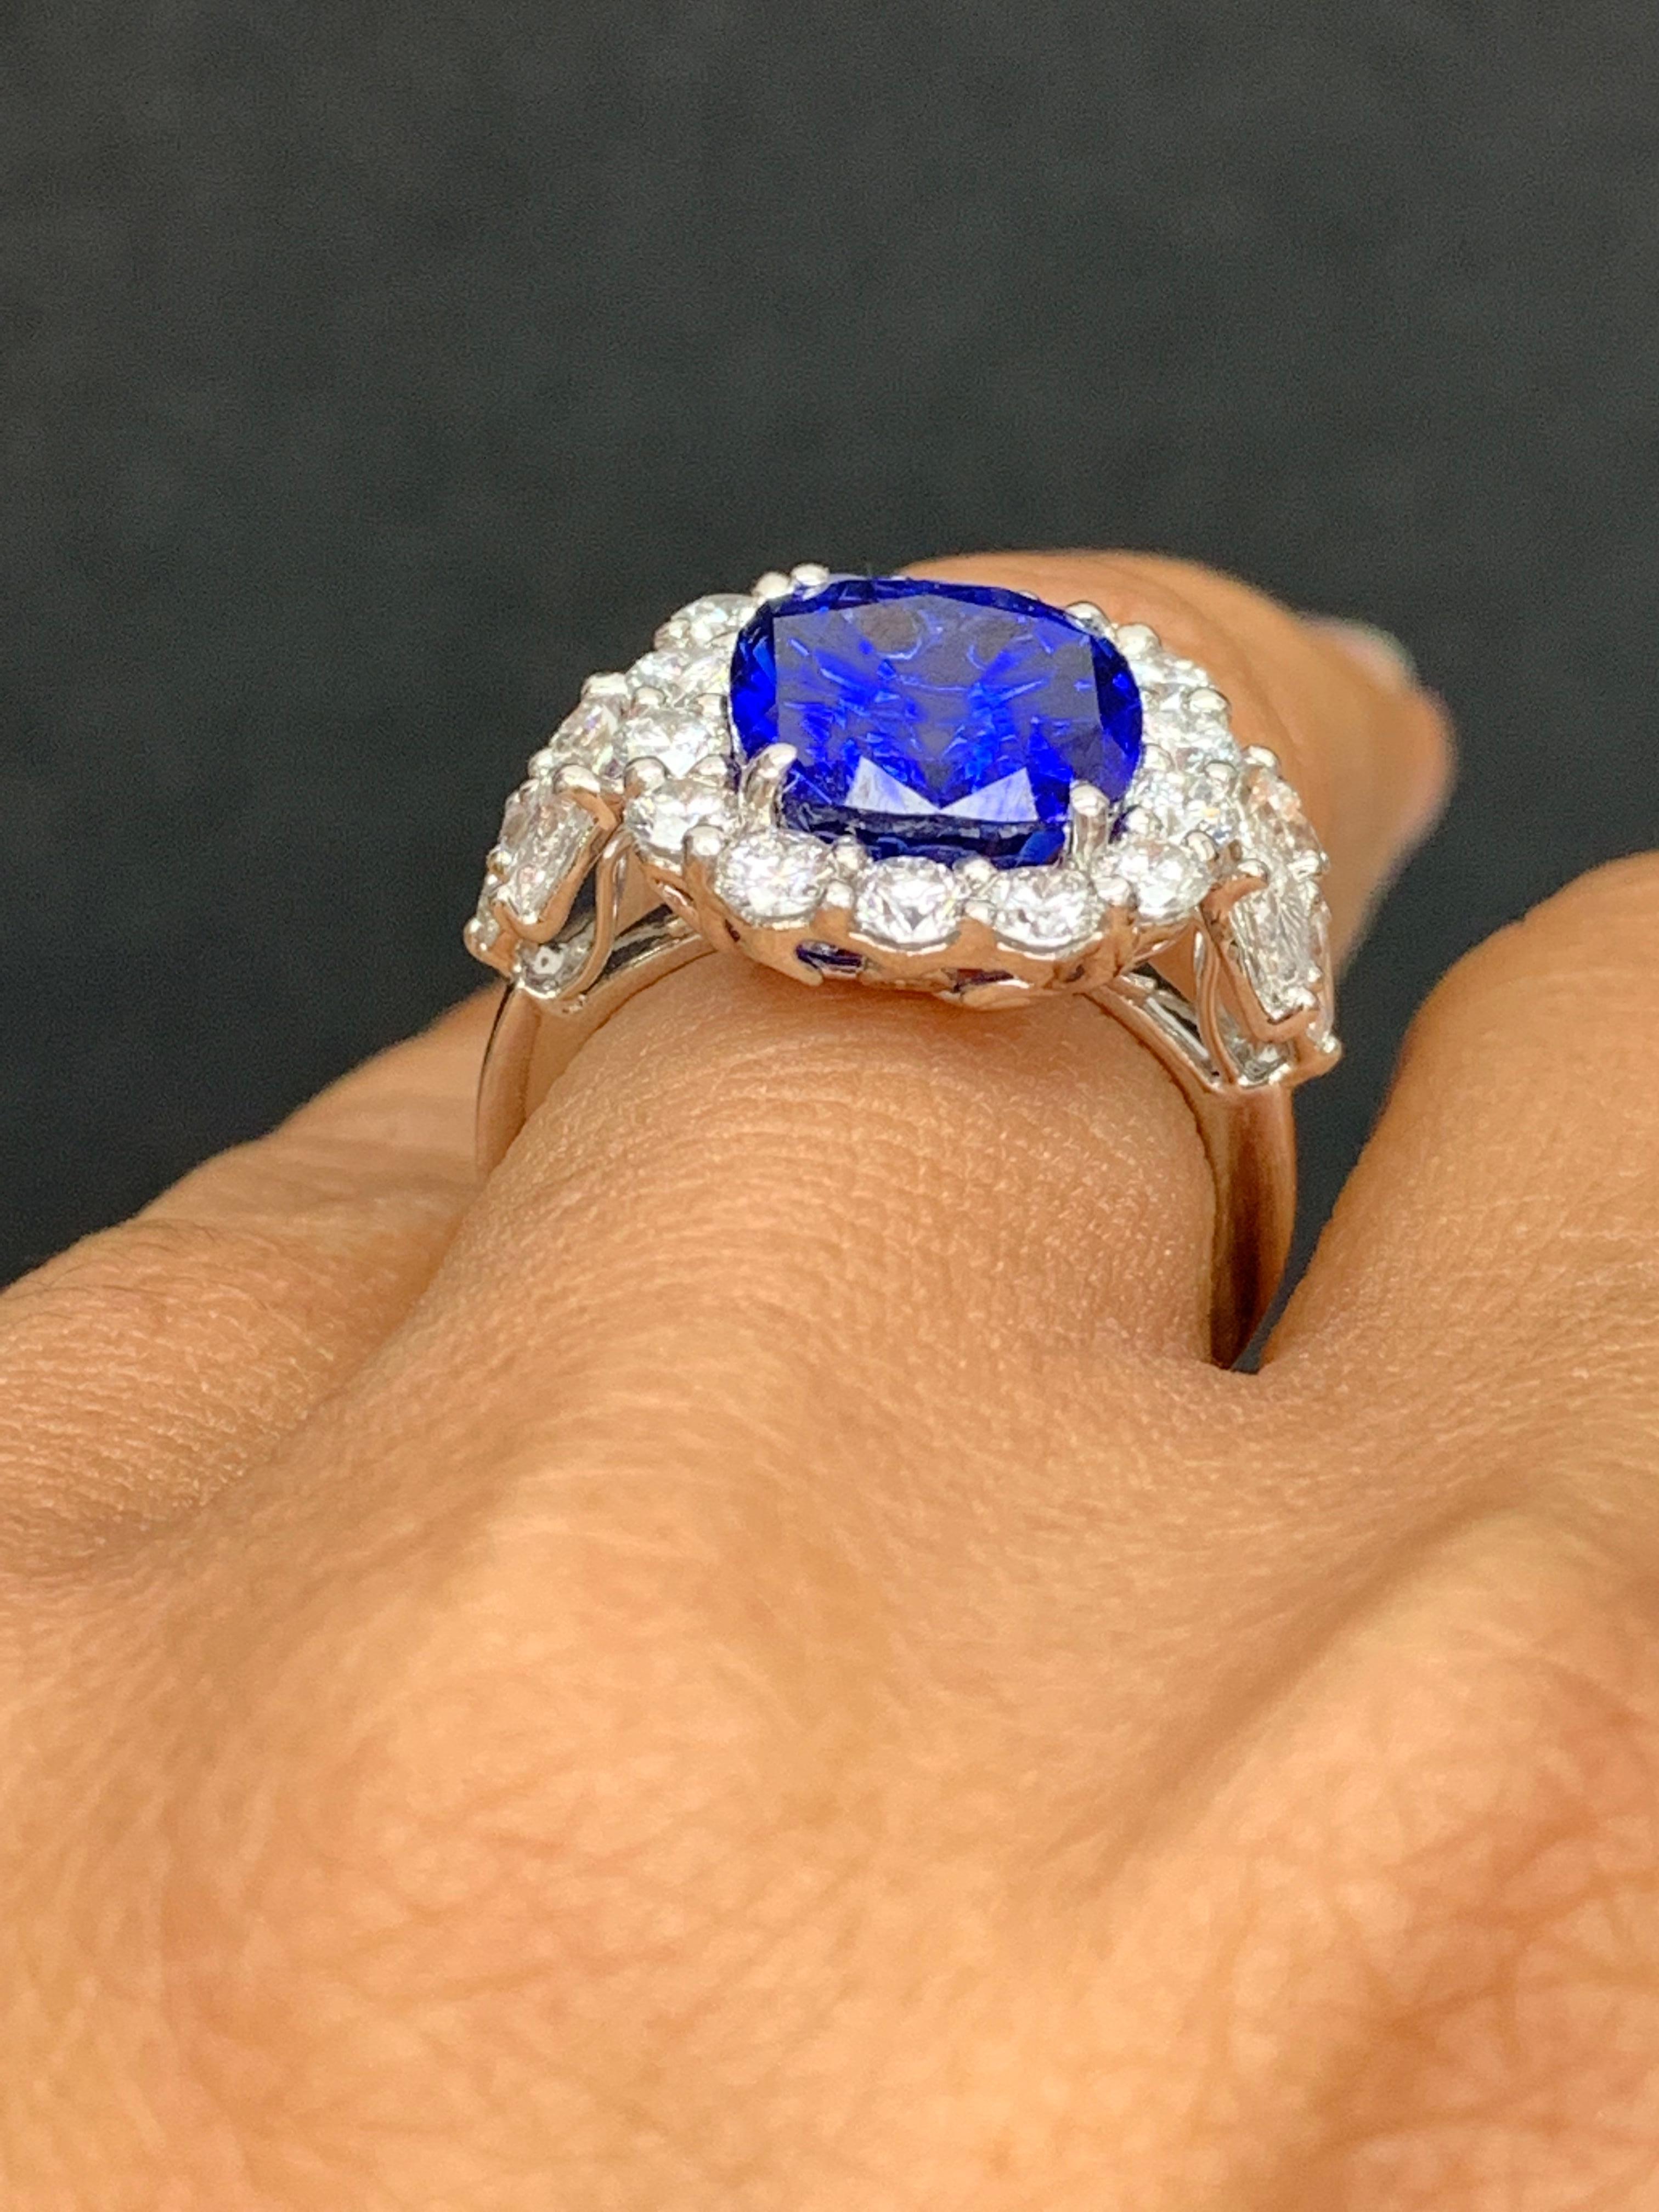 6.61 Carat Cushion Cut Blue Sapphire Diamond Engagement Ring in Platinum For Sale 6